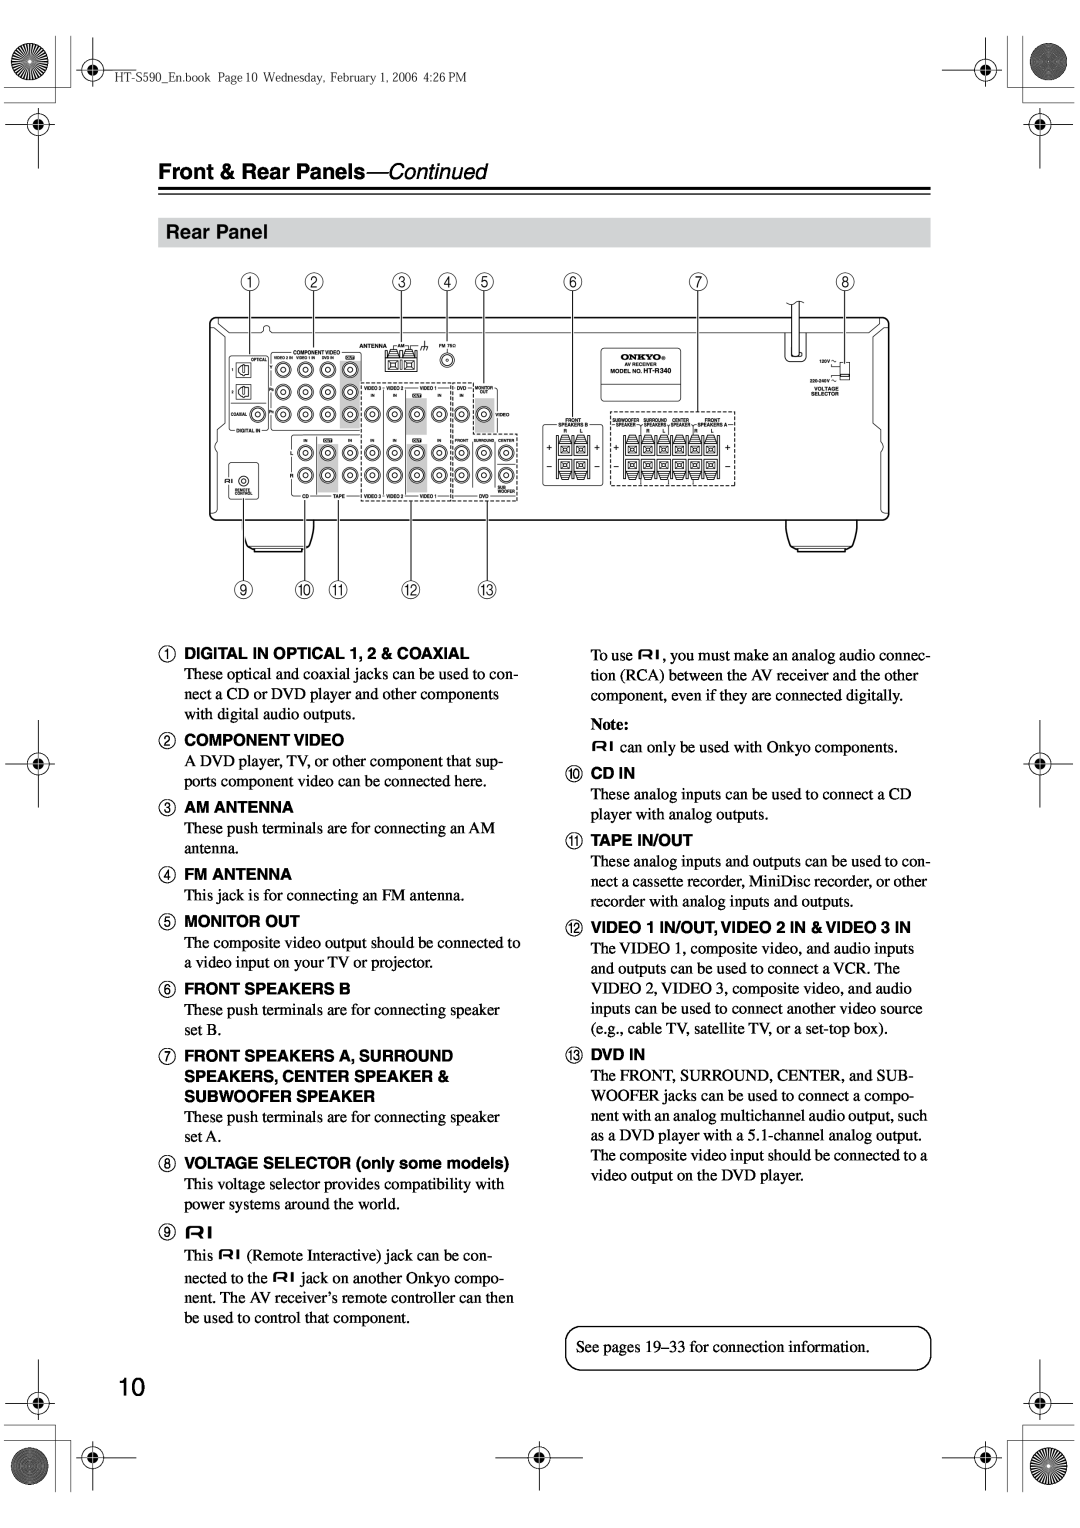 Onkyo SKM-340S, SKC-340C, SKF-340F, SKW-340 instruction manual J K L M, Front & Rear Panels-Continued 